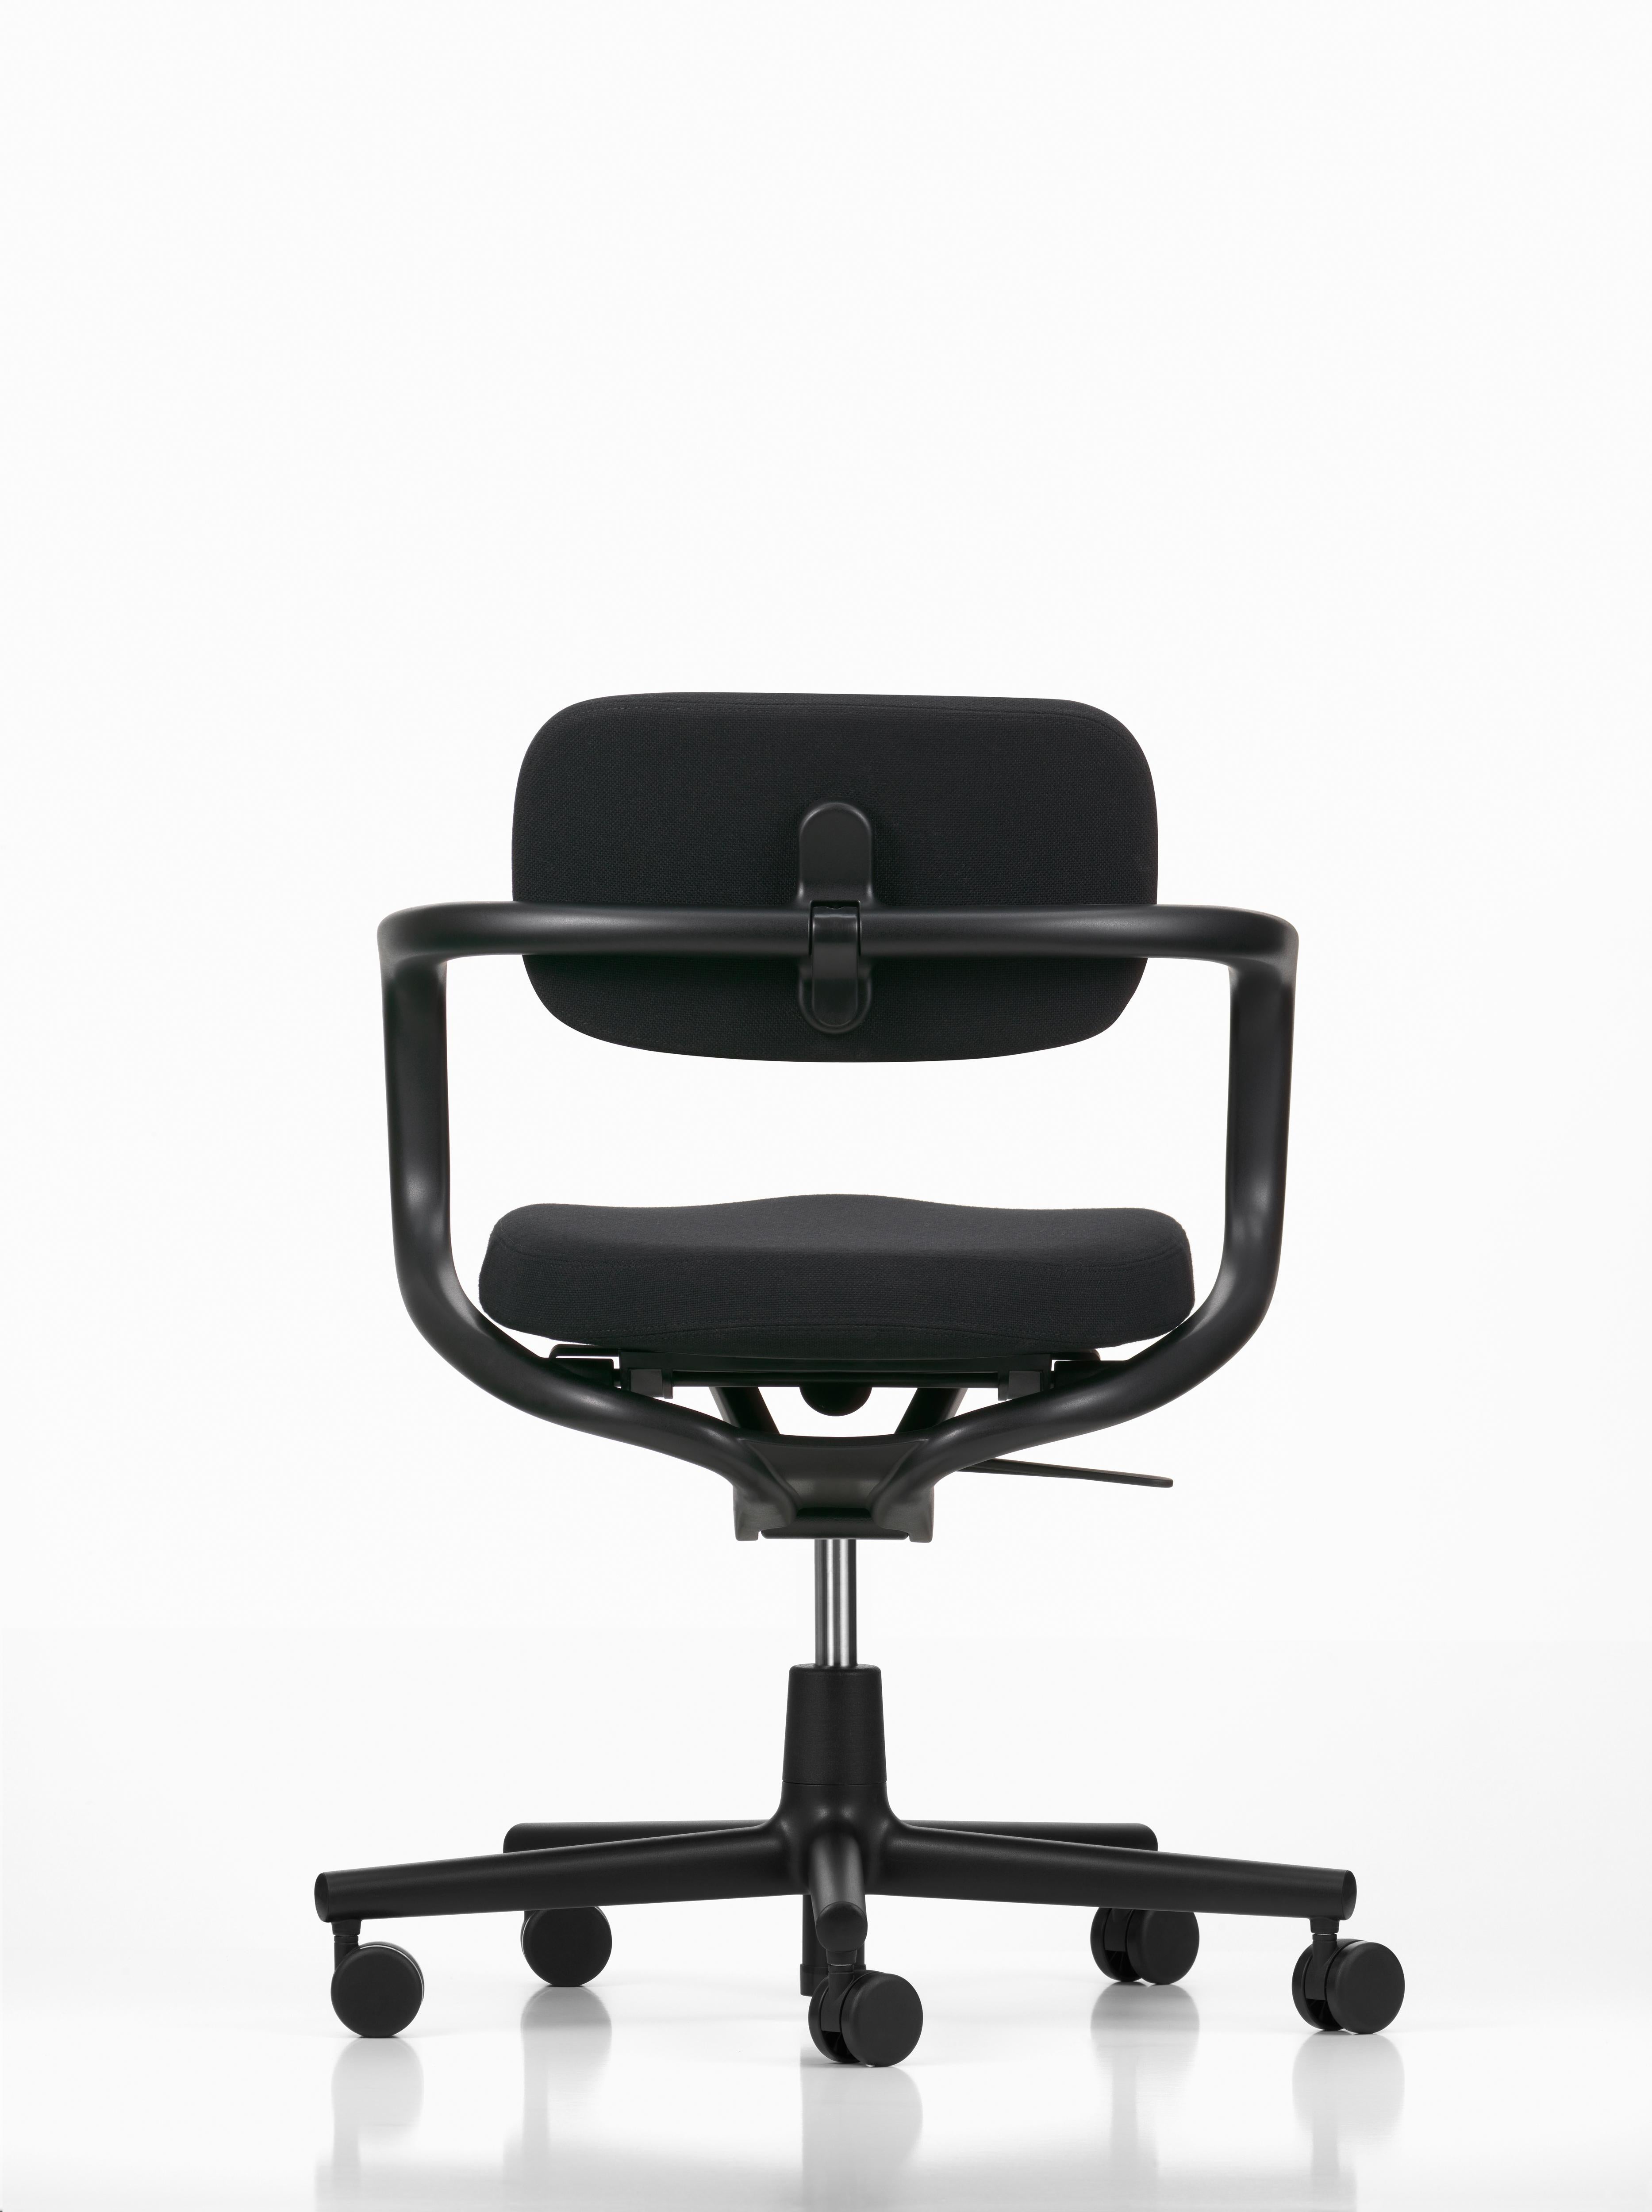 Swiss Vitra Allstar Chair in Nero Hopsak by Konstantin Grcic For Sale